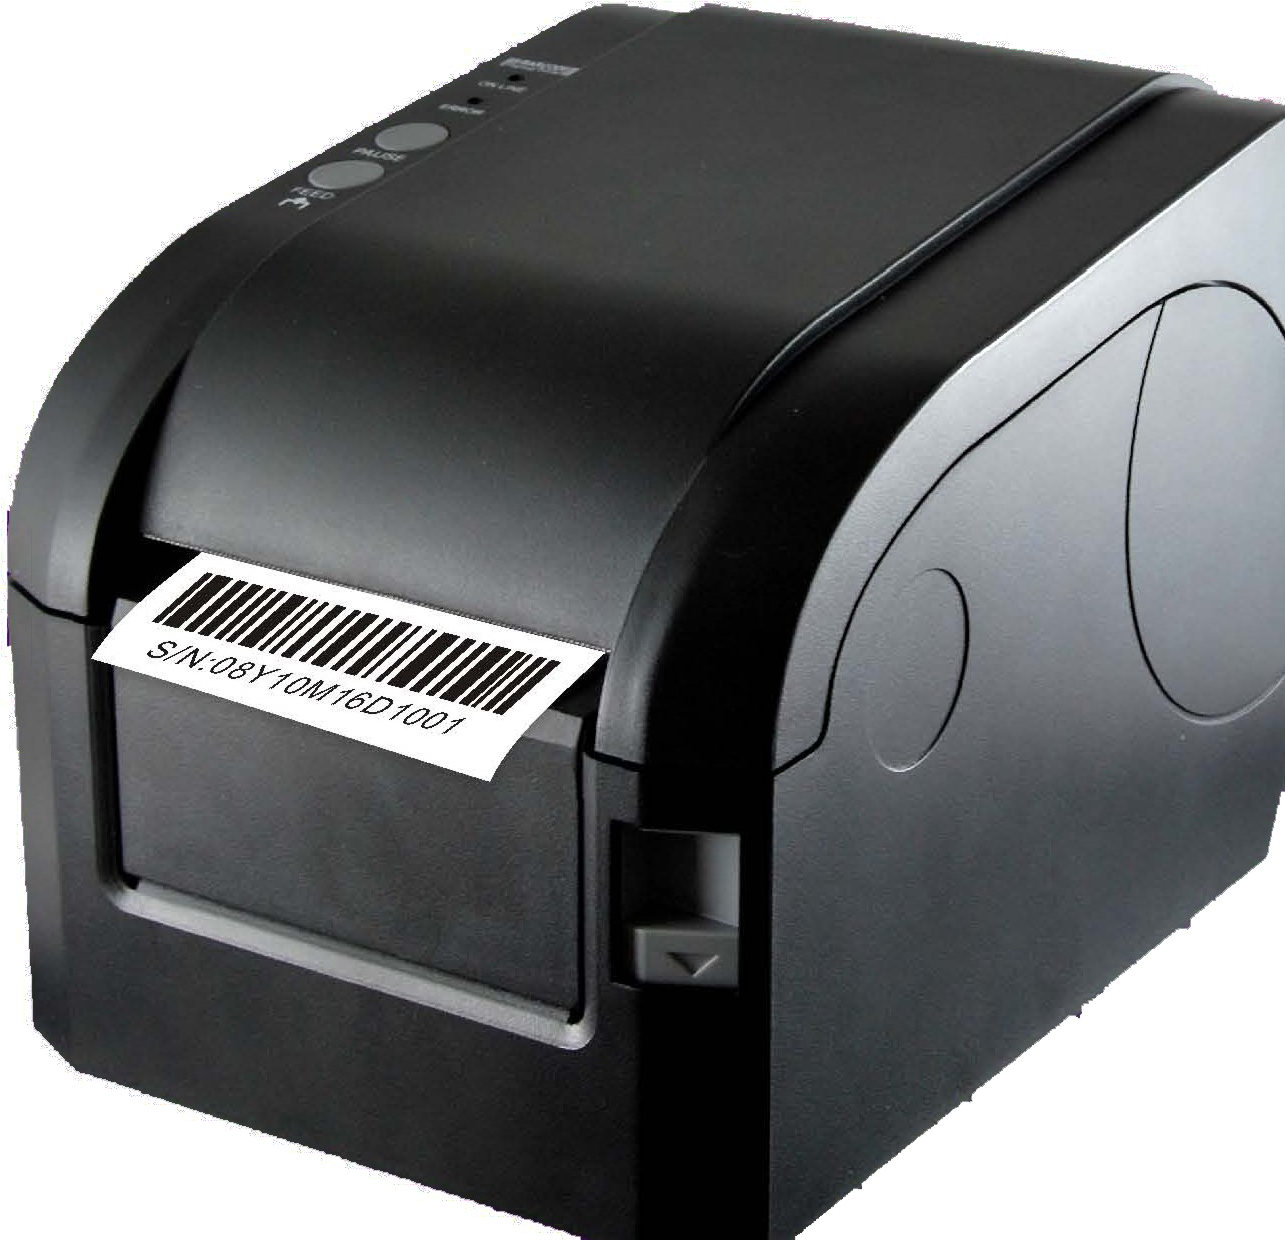 Barcode Printers - Barcode Printer (1412x1271), Png Download